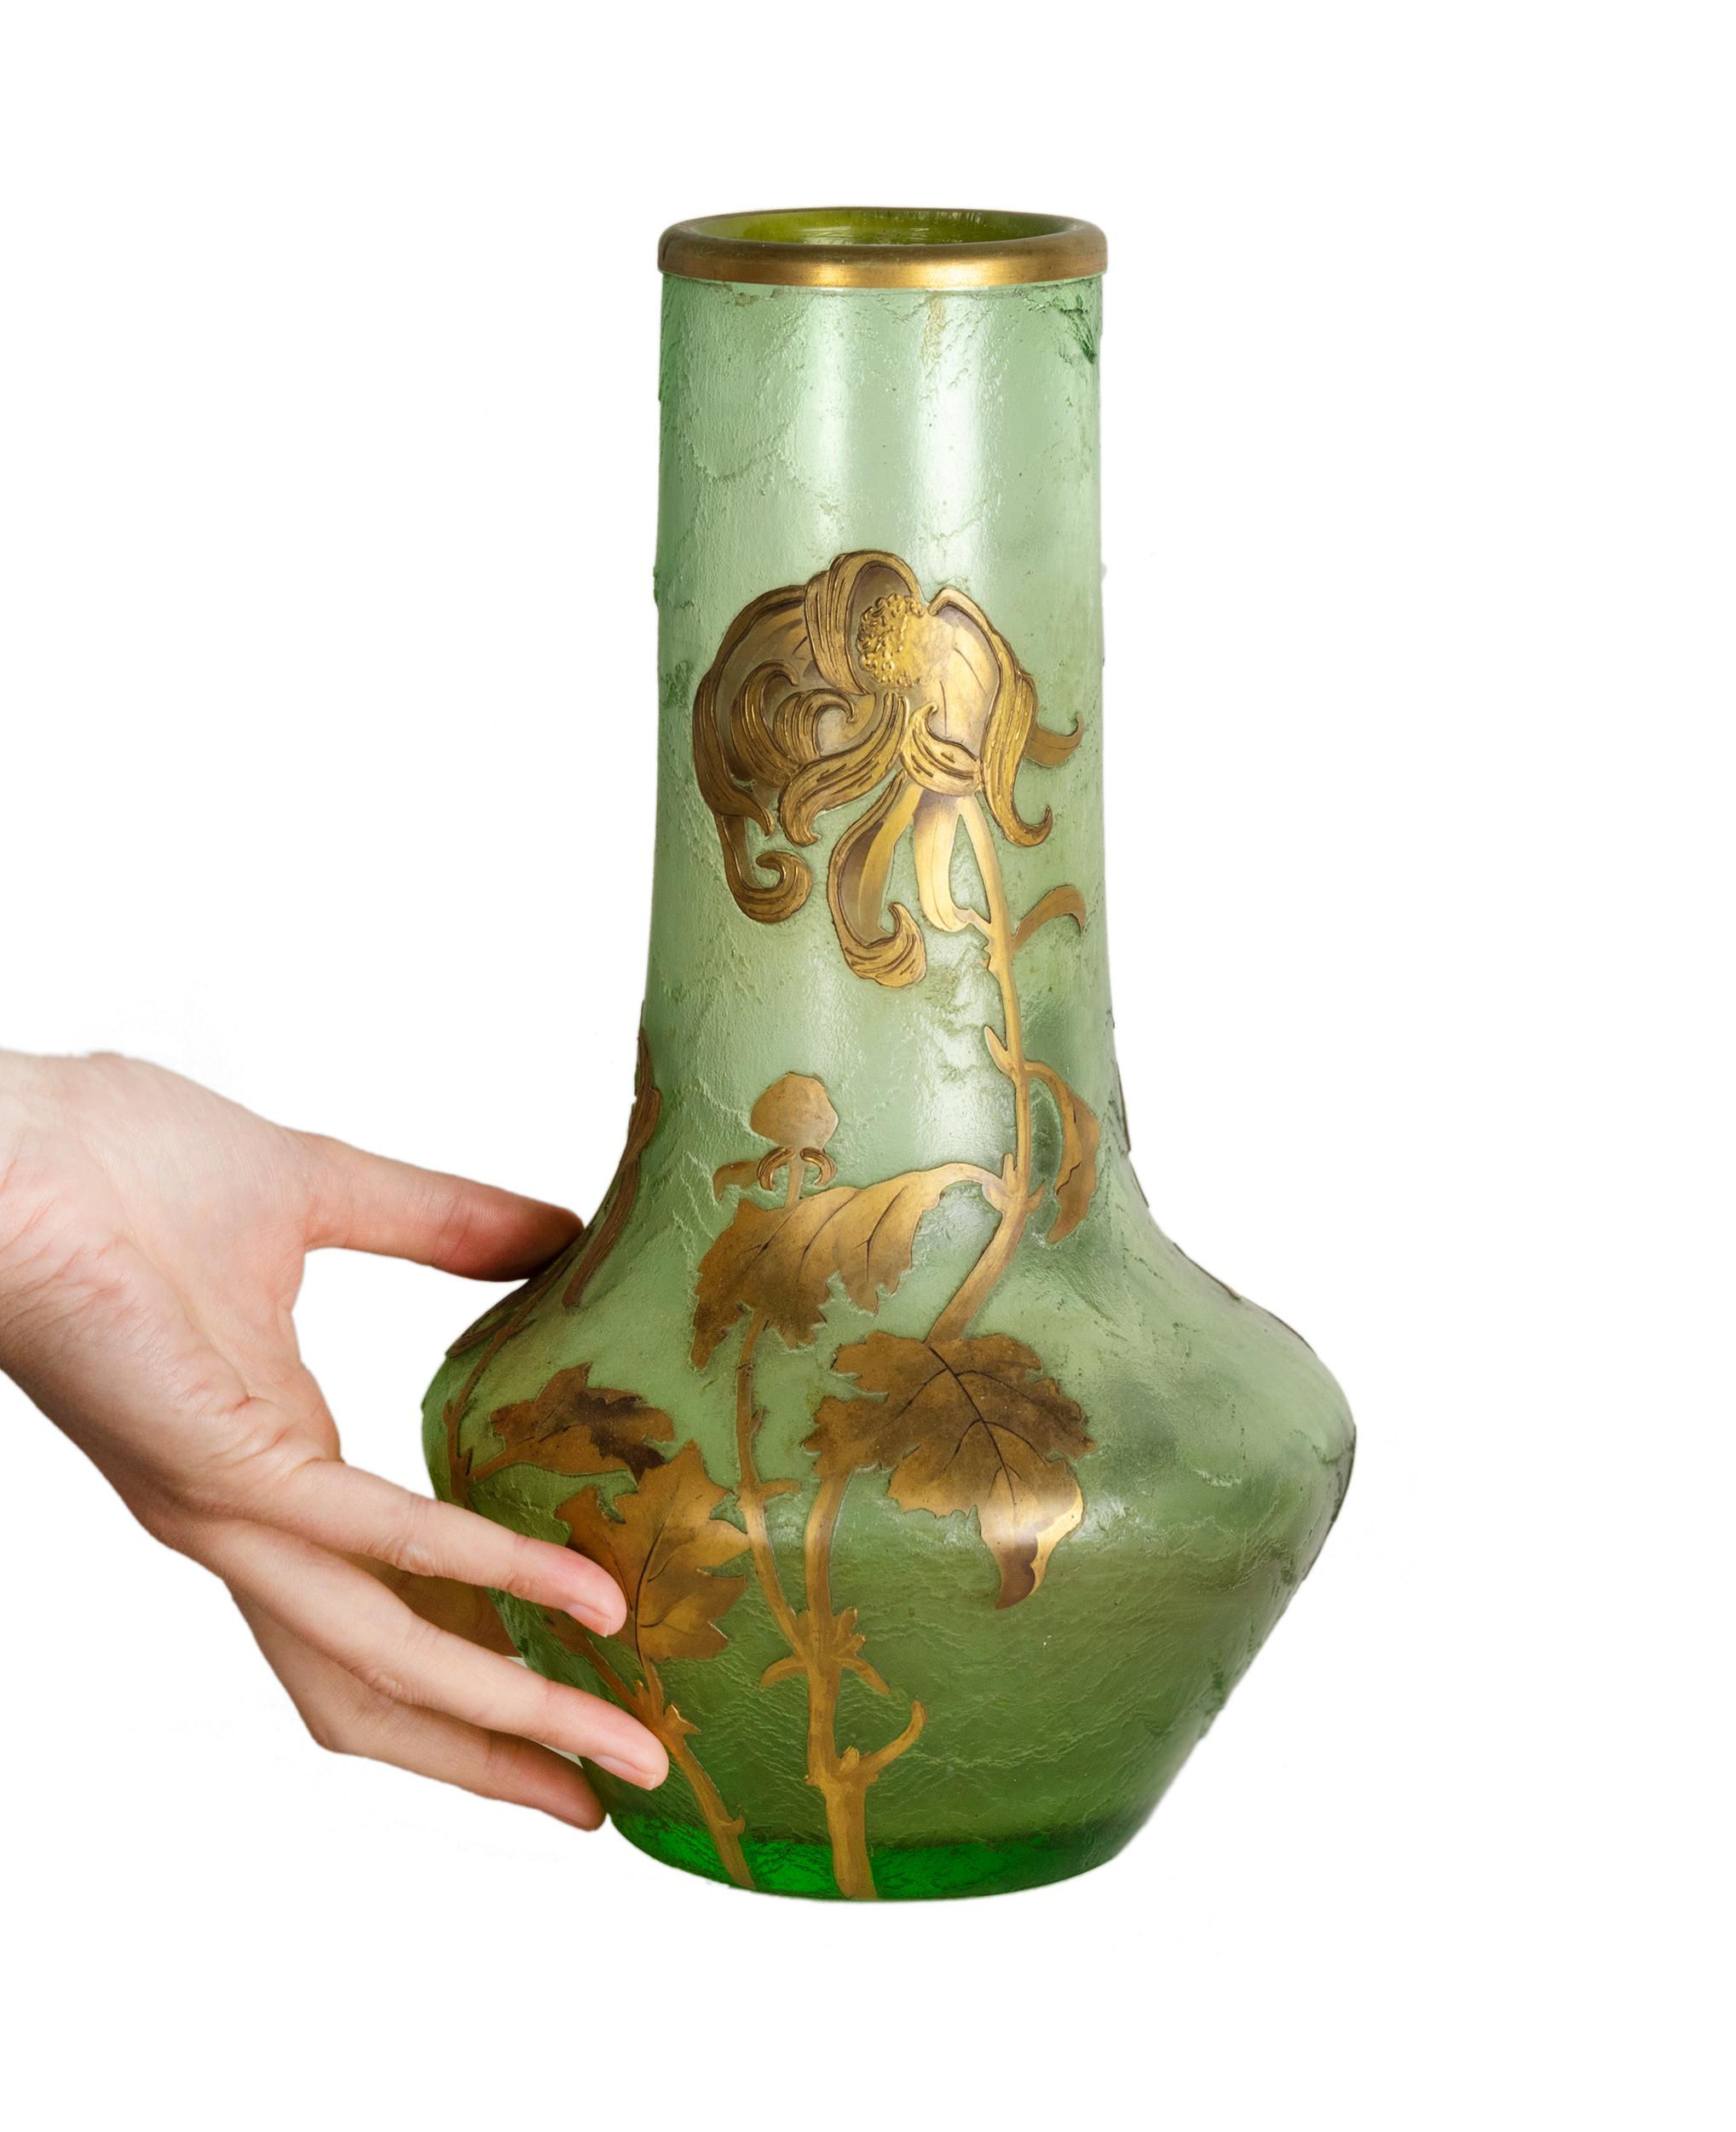 Montjoye, France, Large Art Nouveau Vase in Mouth-Blown Art Glass, 1880-1900 For Sale 2